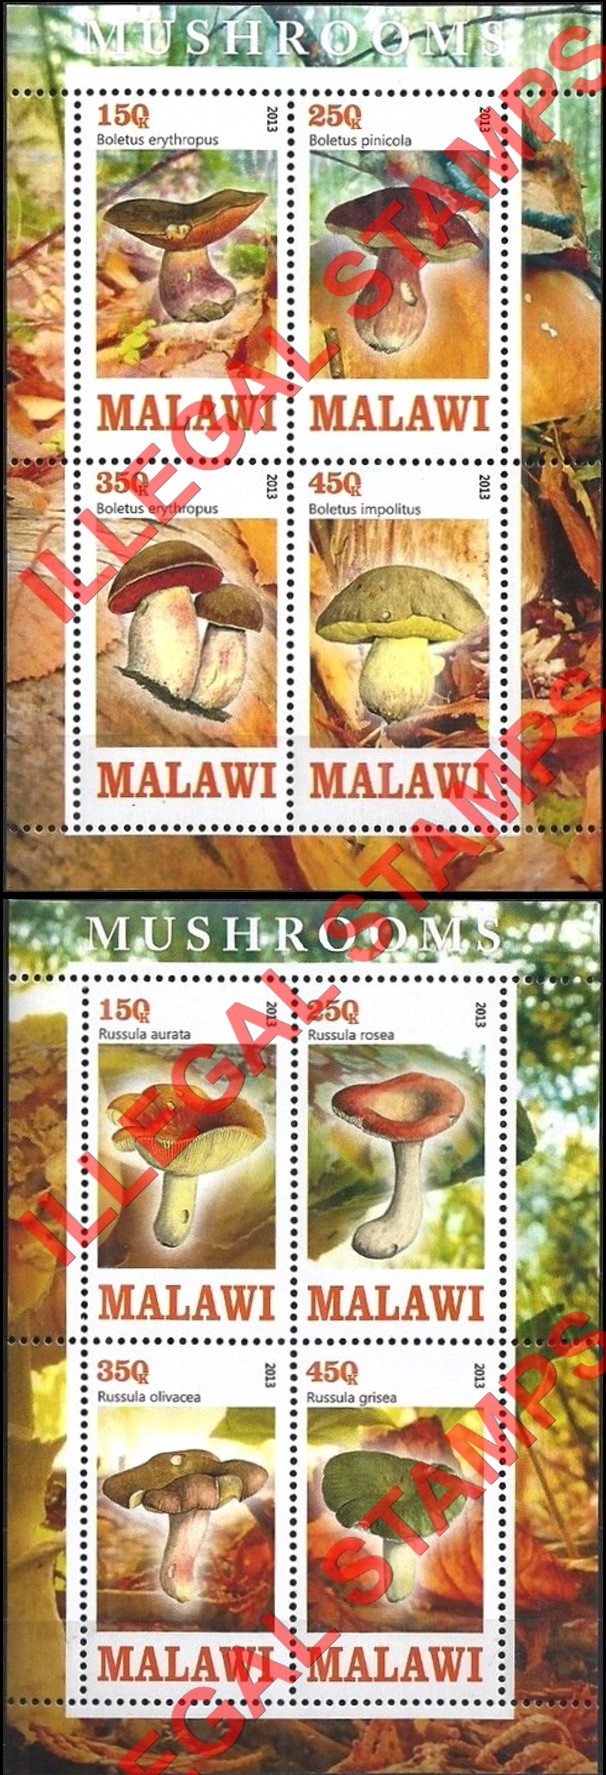 Malawi 2013 Mushrooms Illegal Stamp Souvenir Sheets of 4 (Part 1)